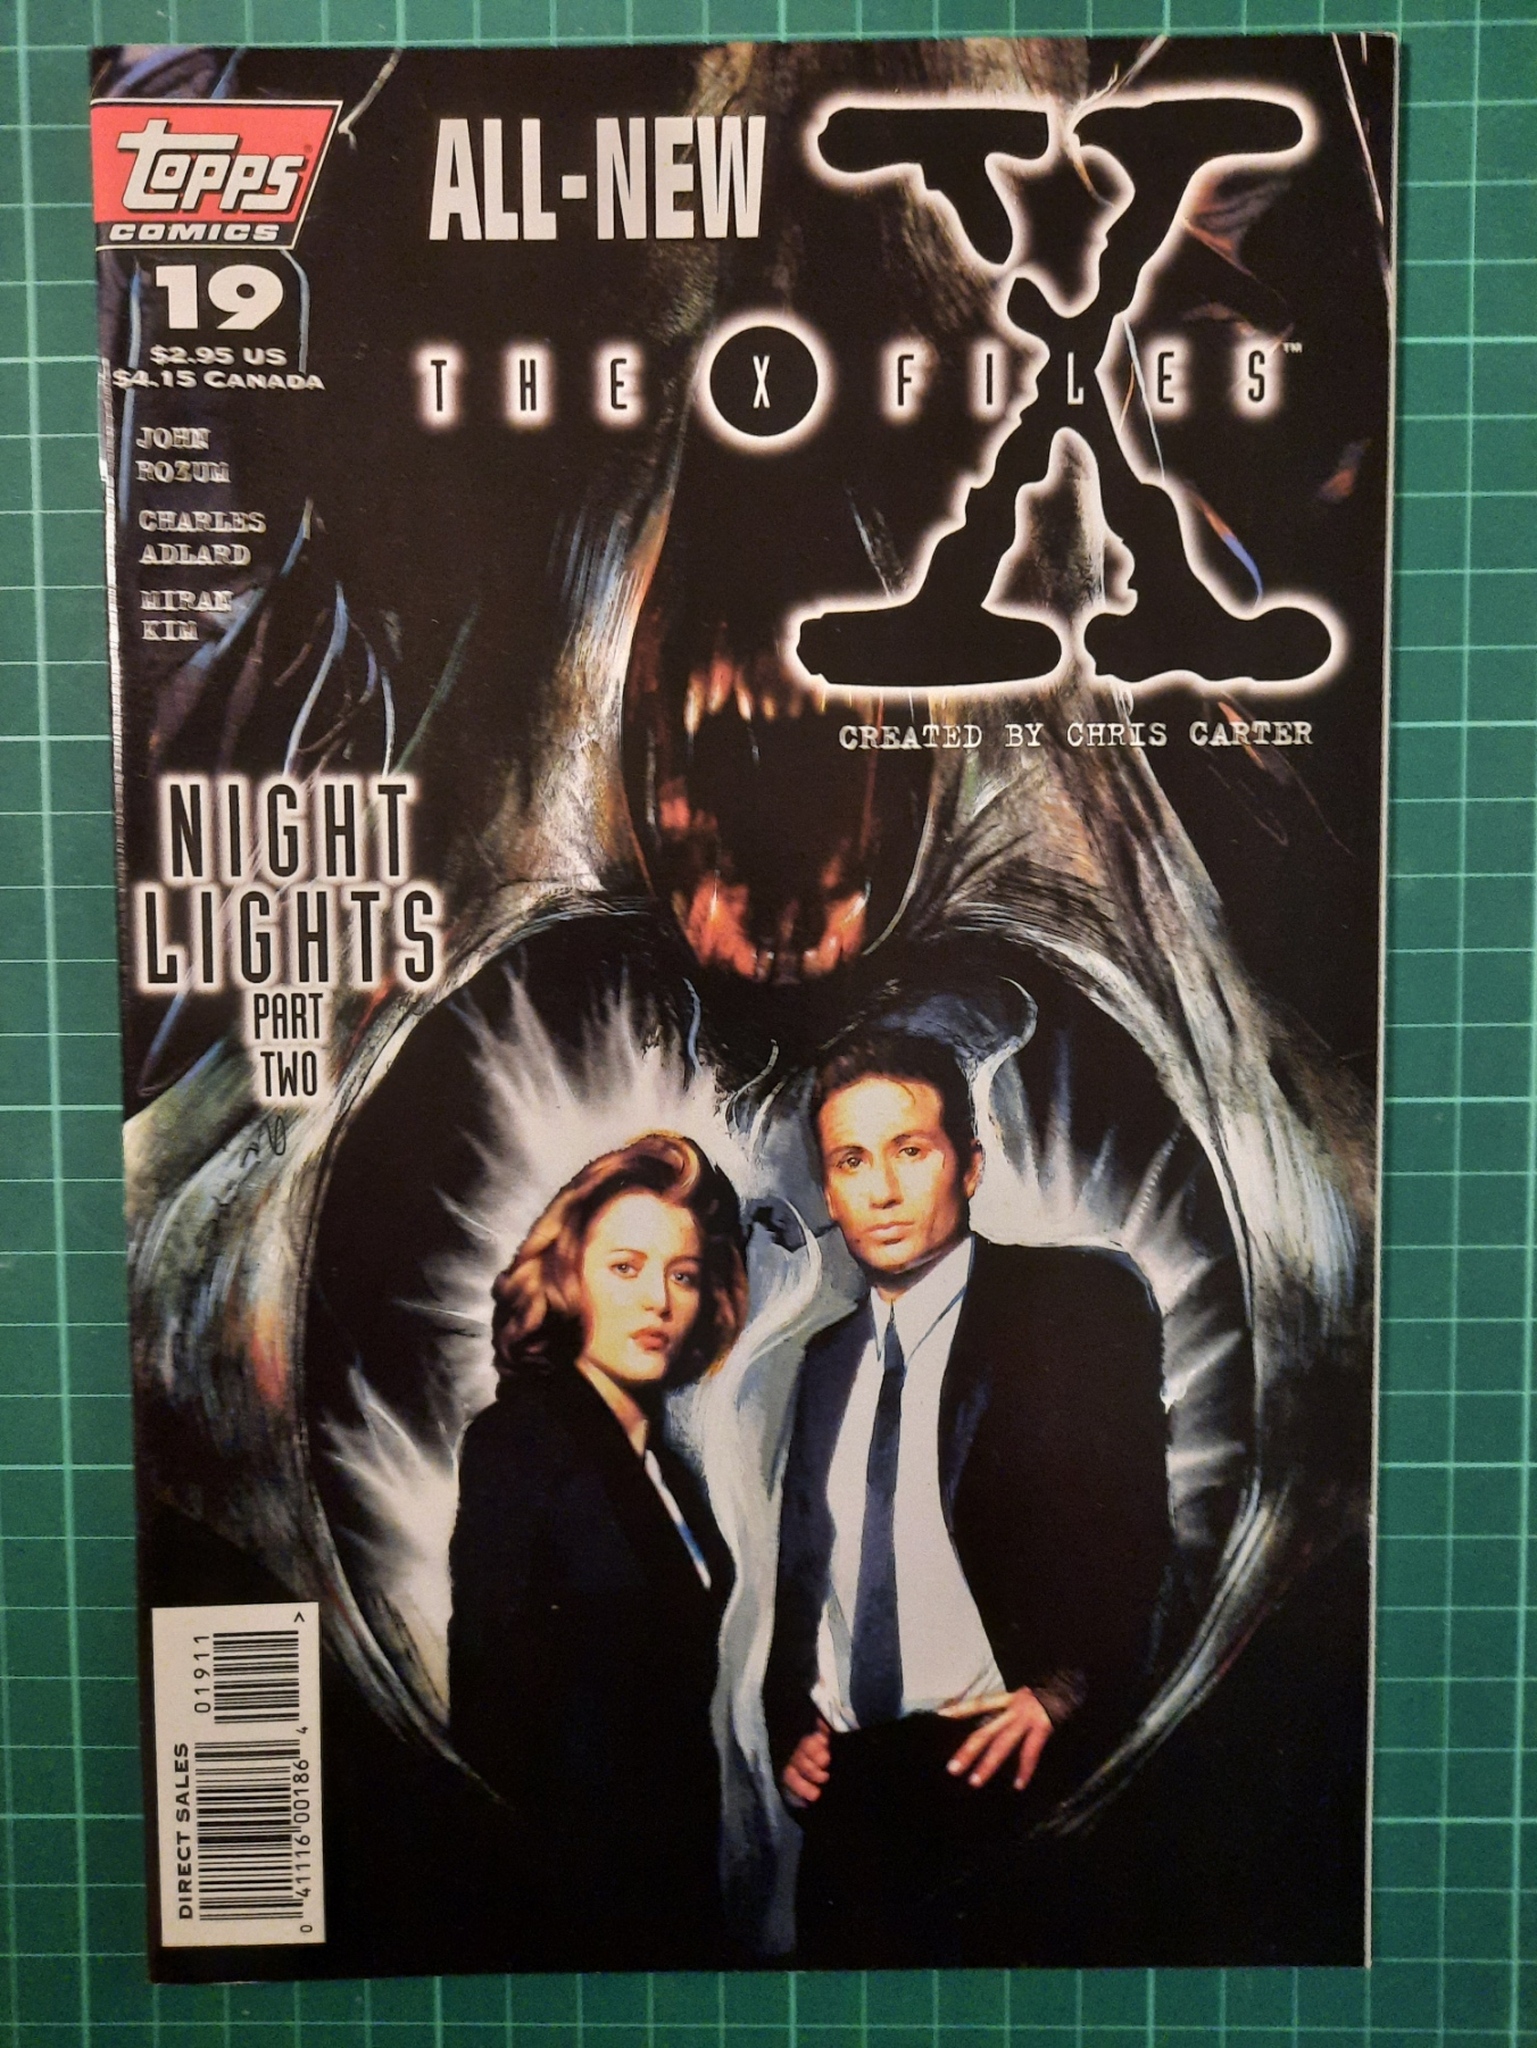 X-Files - vol 1 #19 (USA utgave)